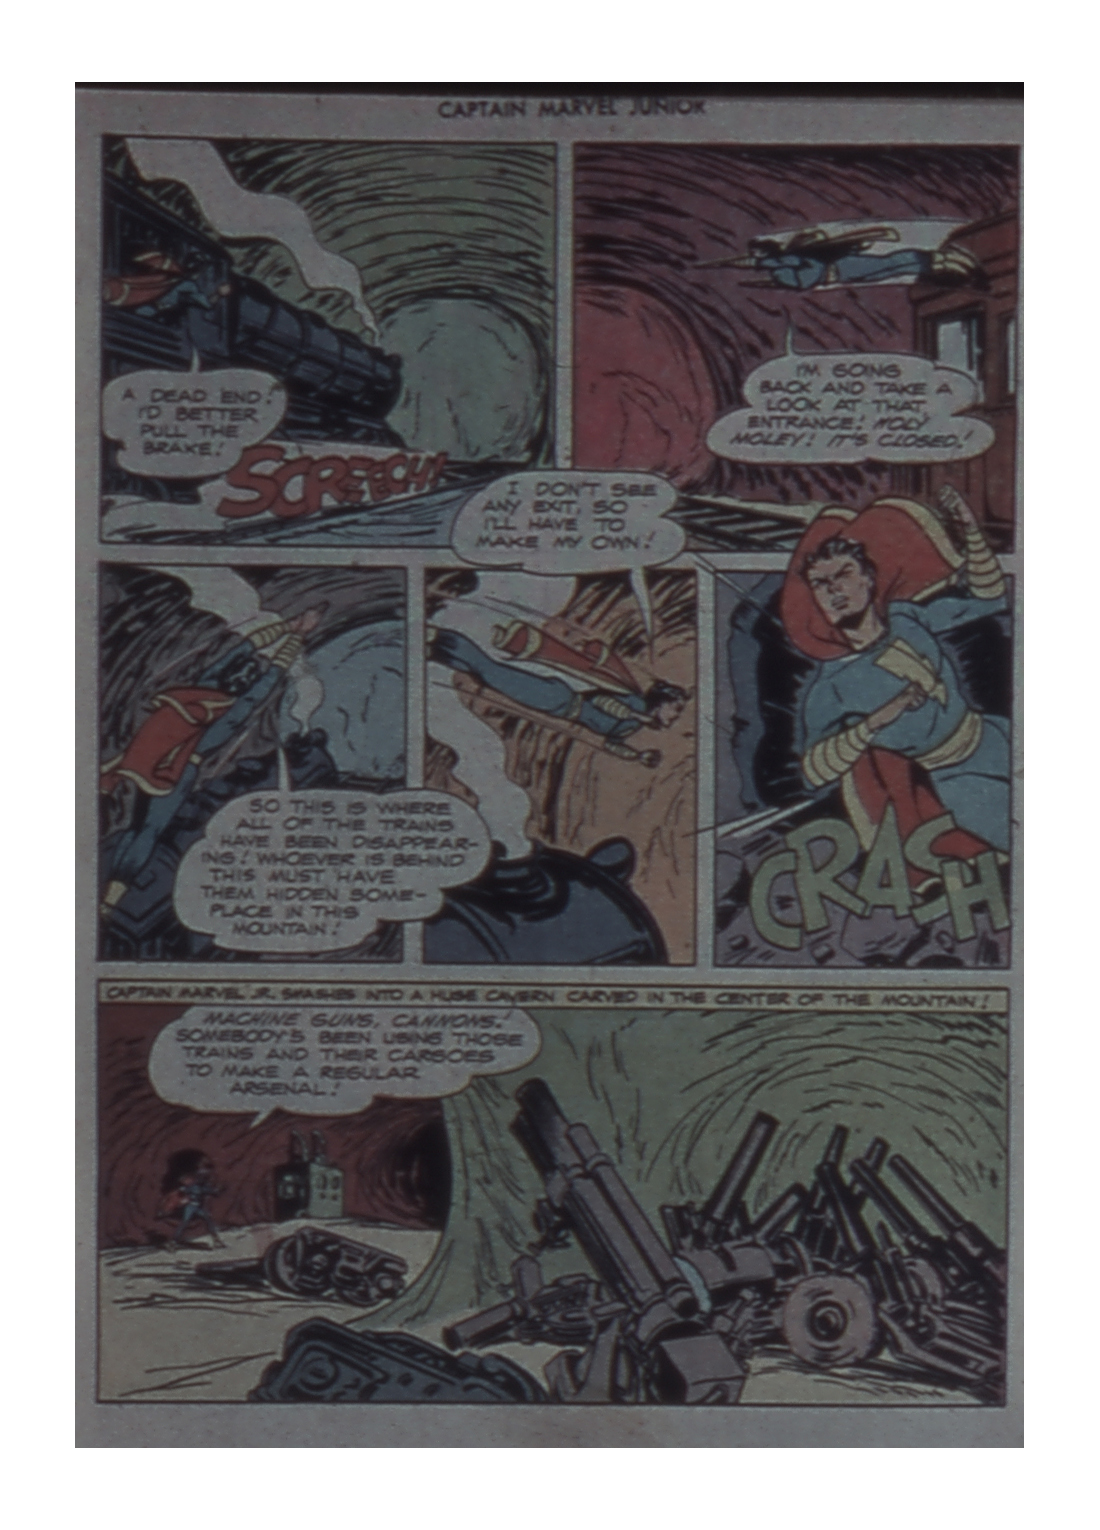 Read online Captain Marvel, Jr. comic -  Issue #63 - 19